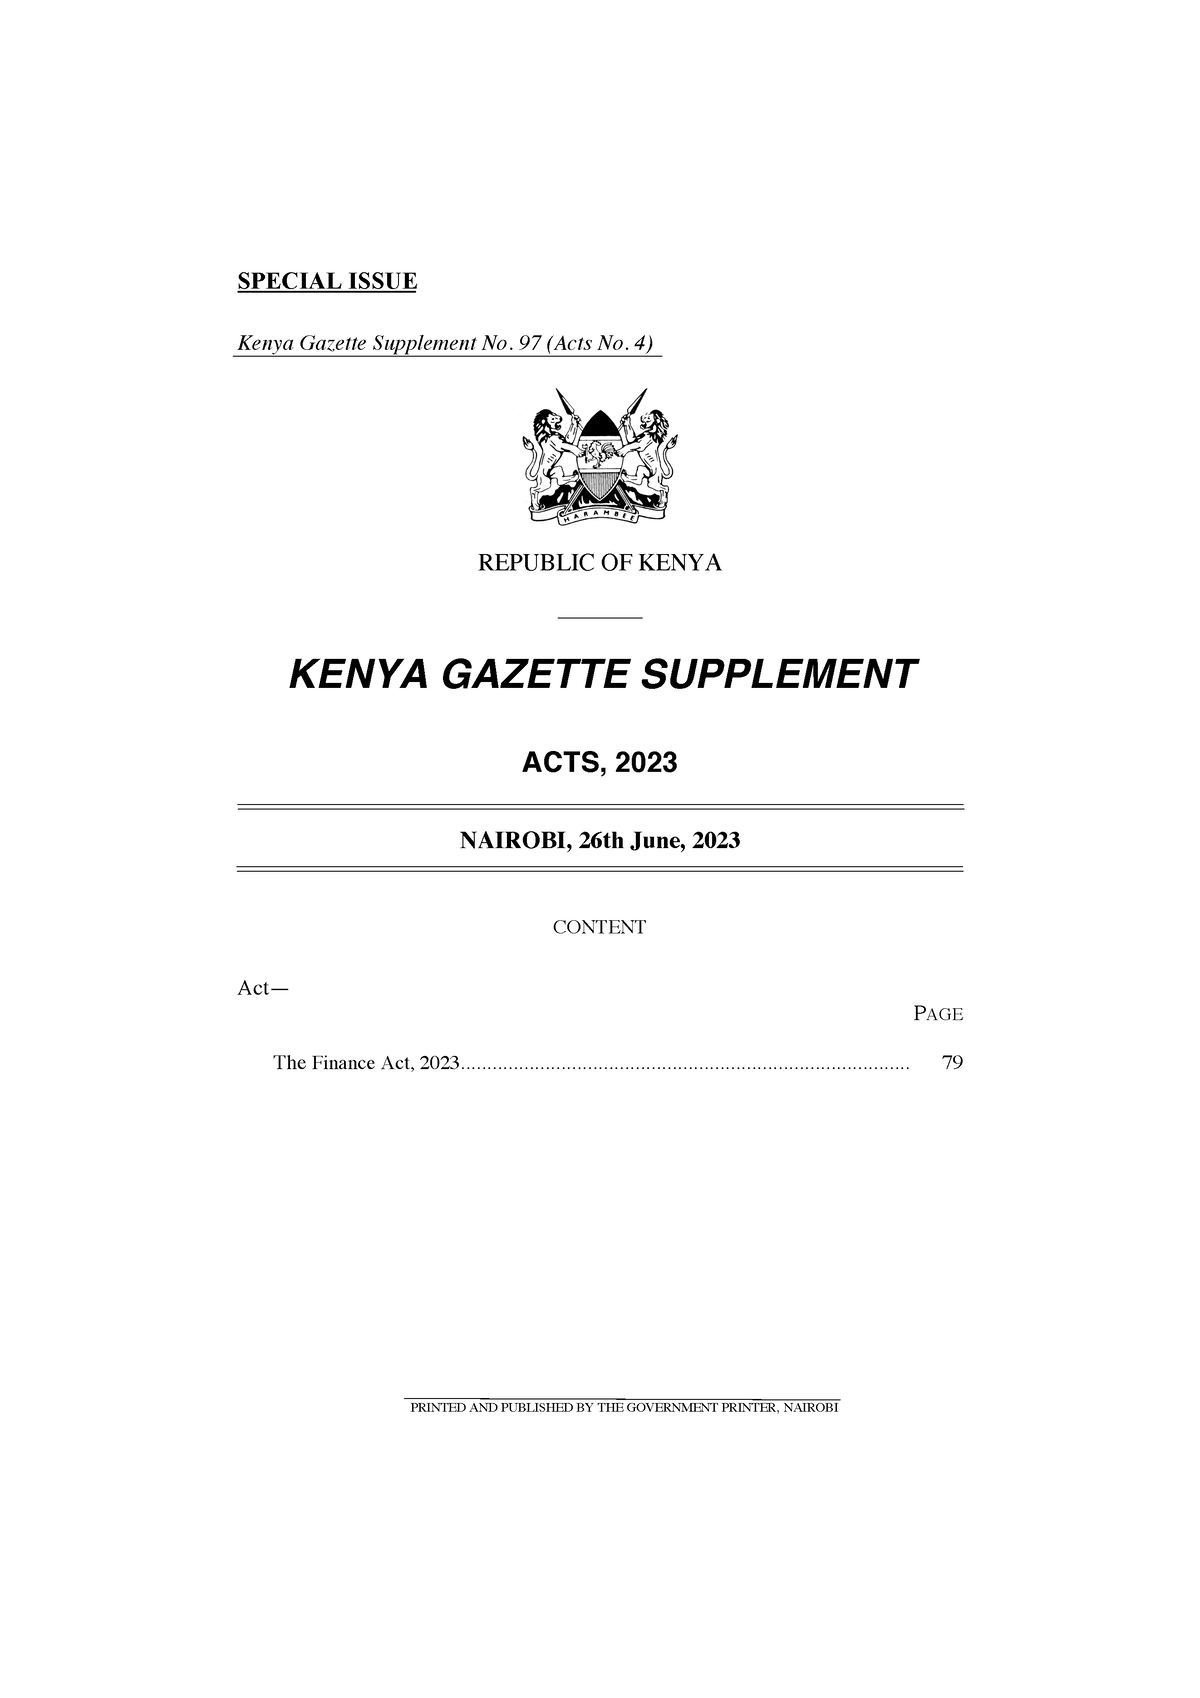 The Finance Act 2023 SPECIAL ISSUE Kenya Gazette Supplement No. 97